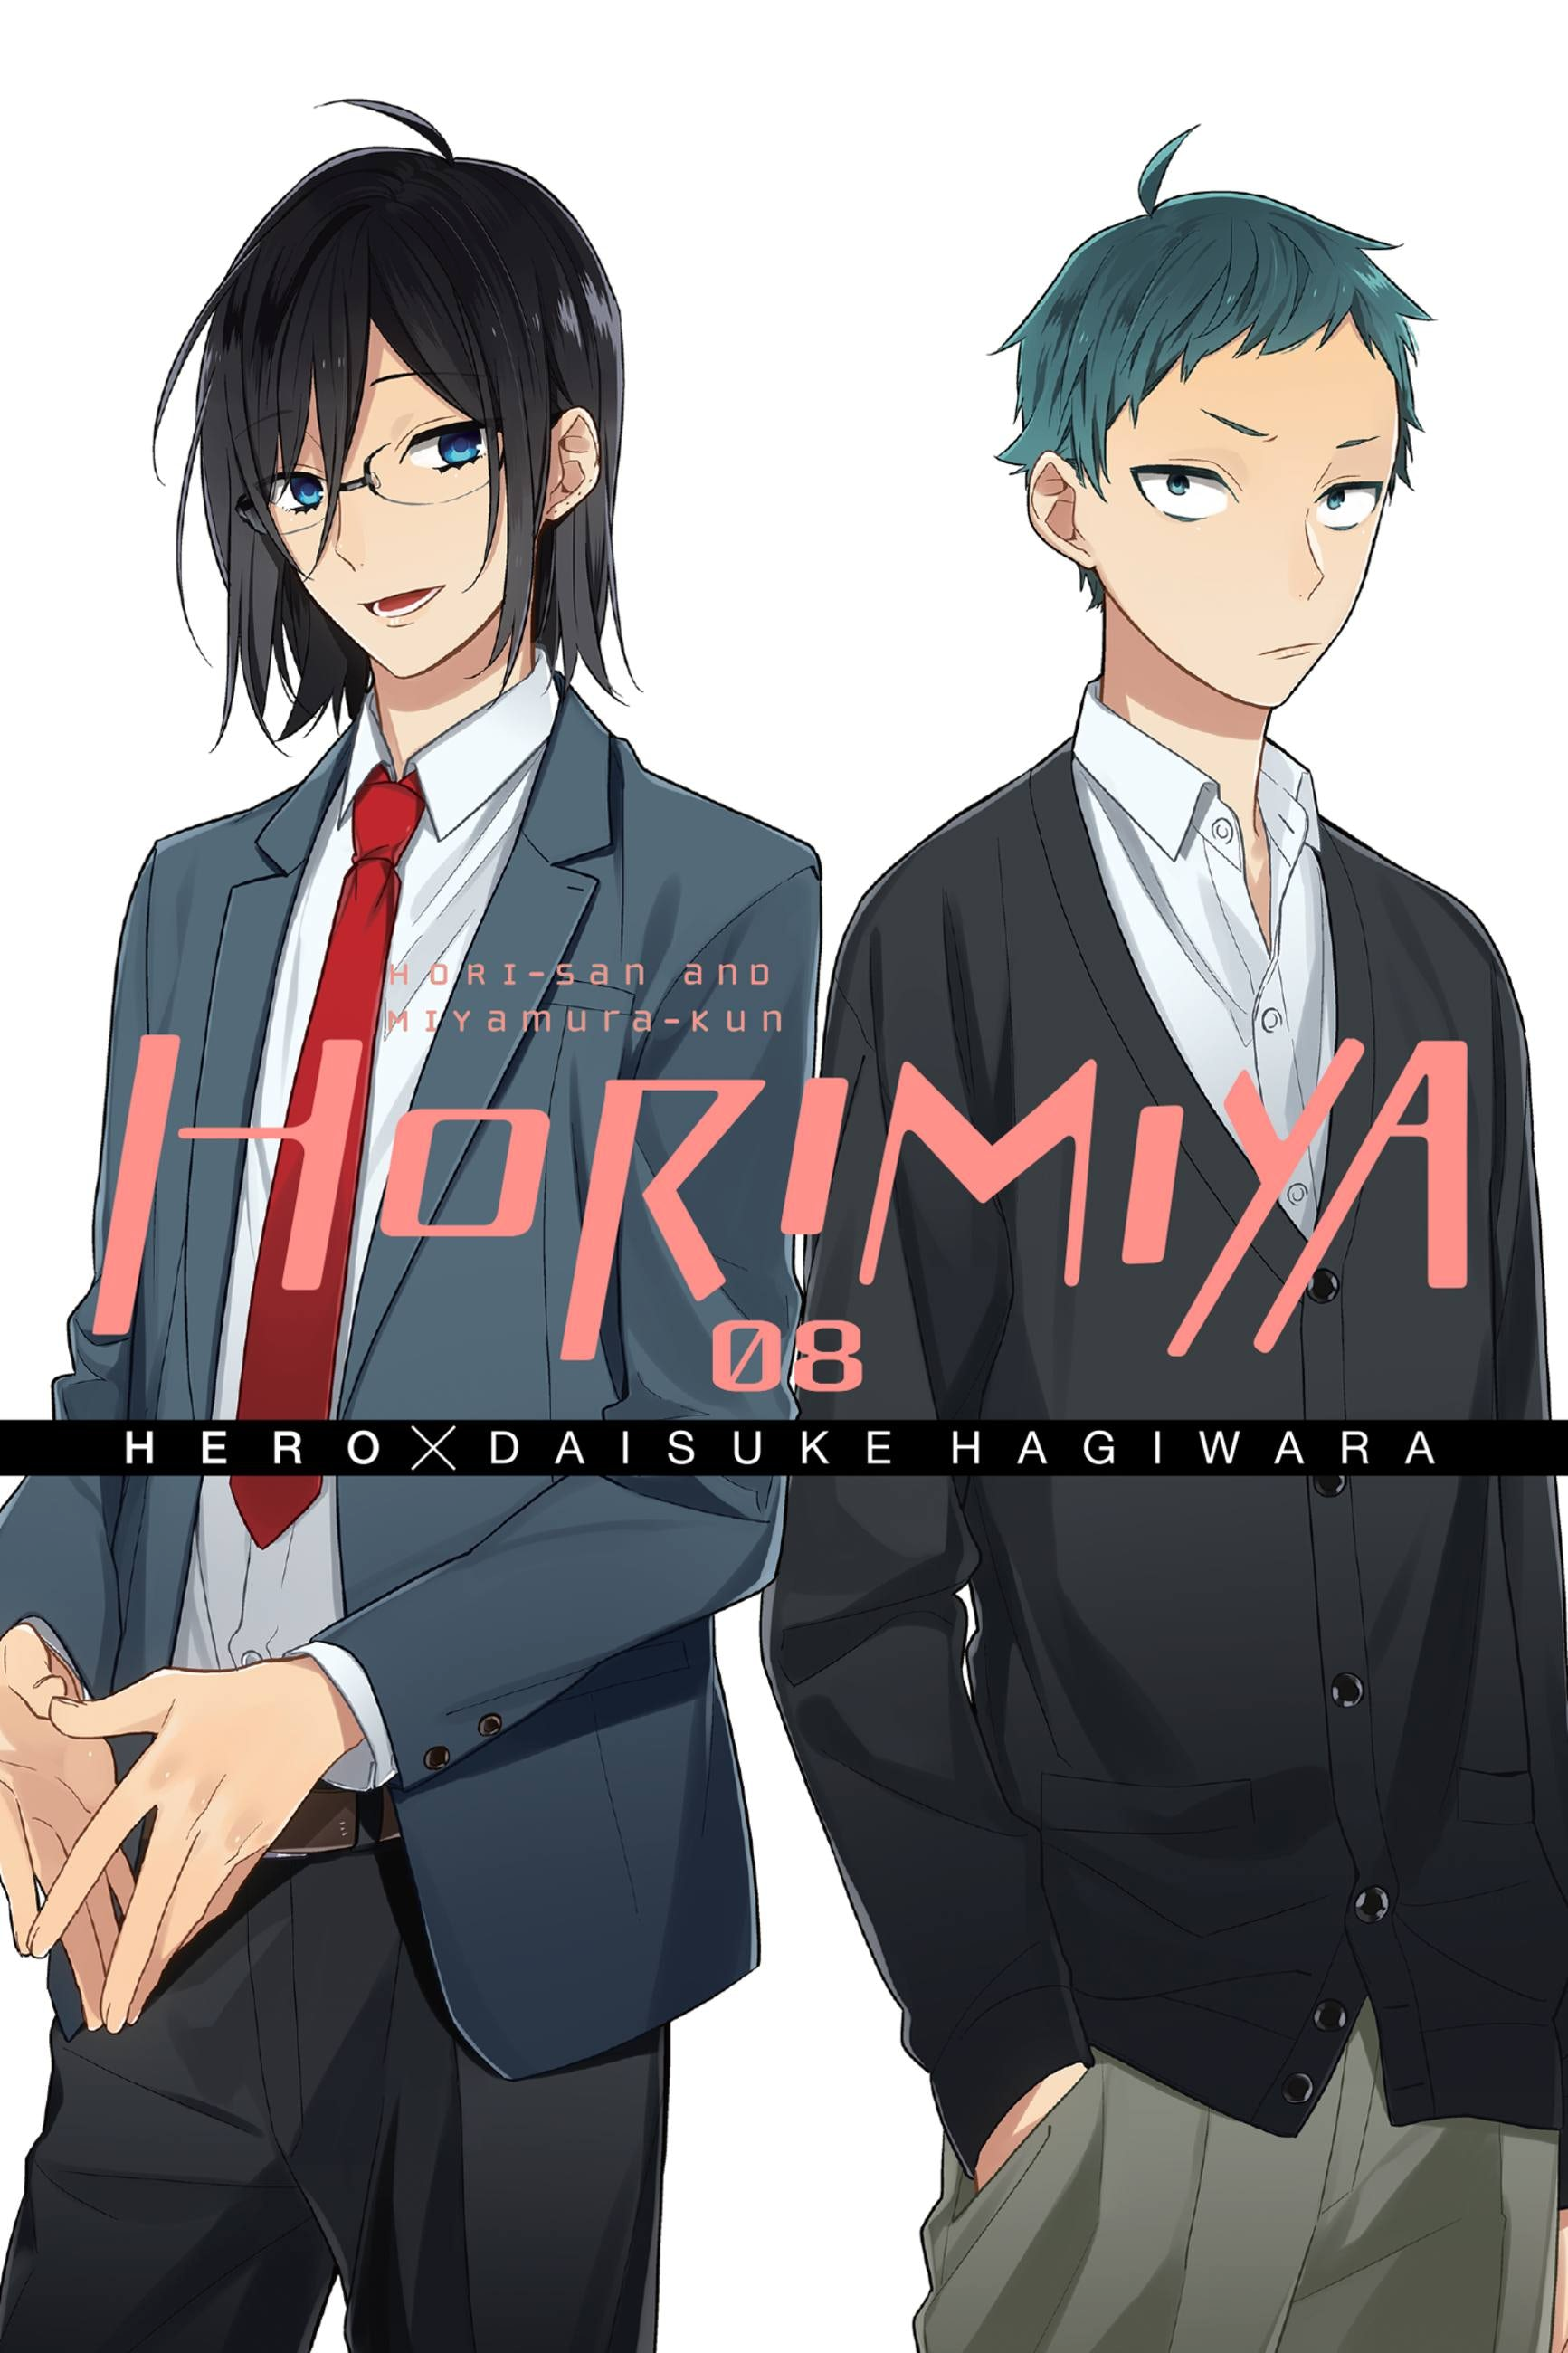 Horimiya Episode 8: Miyamura Shows His Dominant Side - Anime Corner